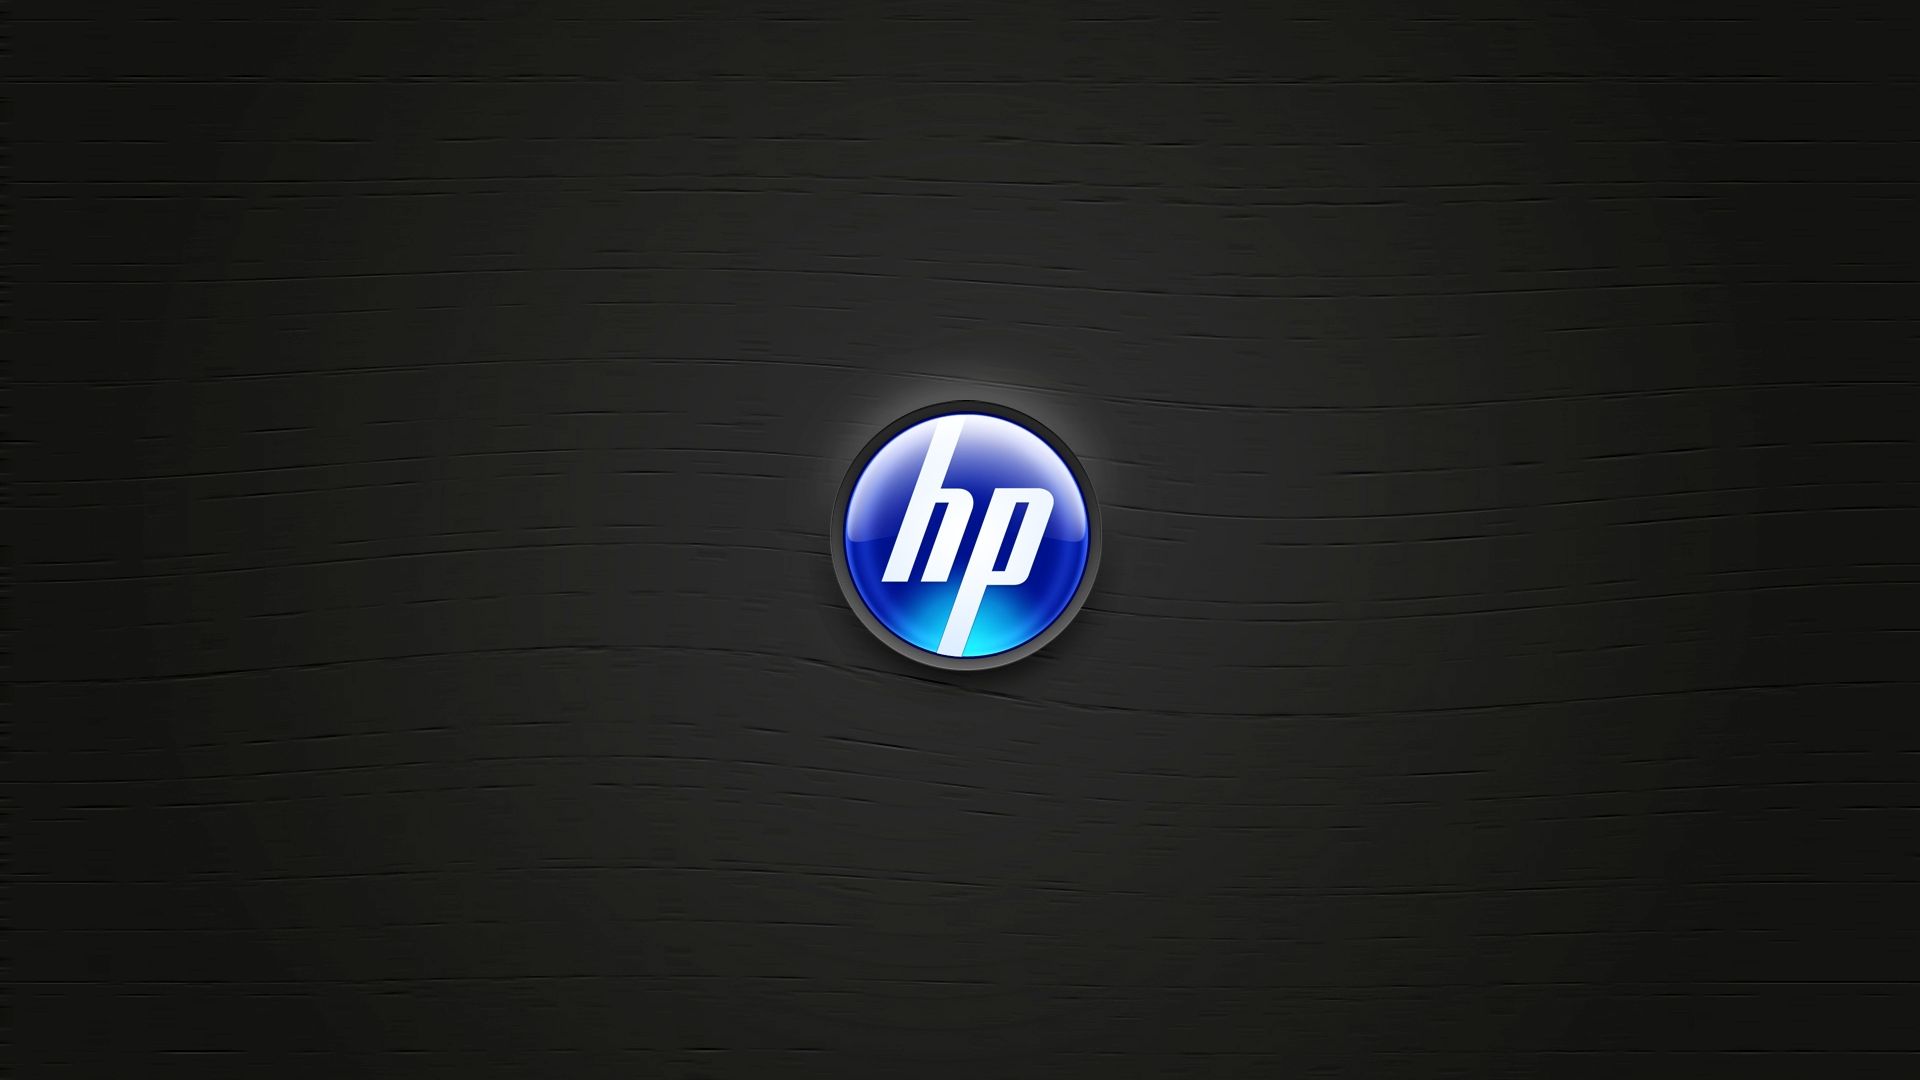 HP OMEN Wallpapers High Quality for Desktop  PixelsTalkNet